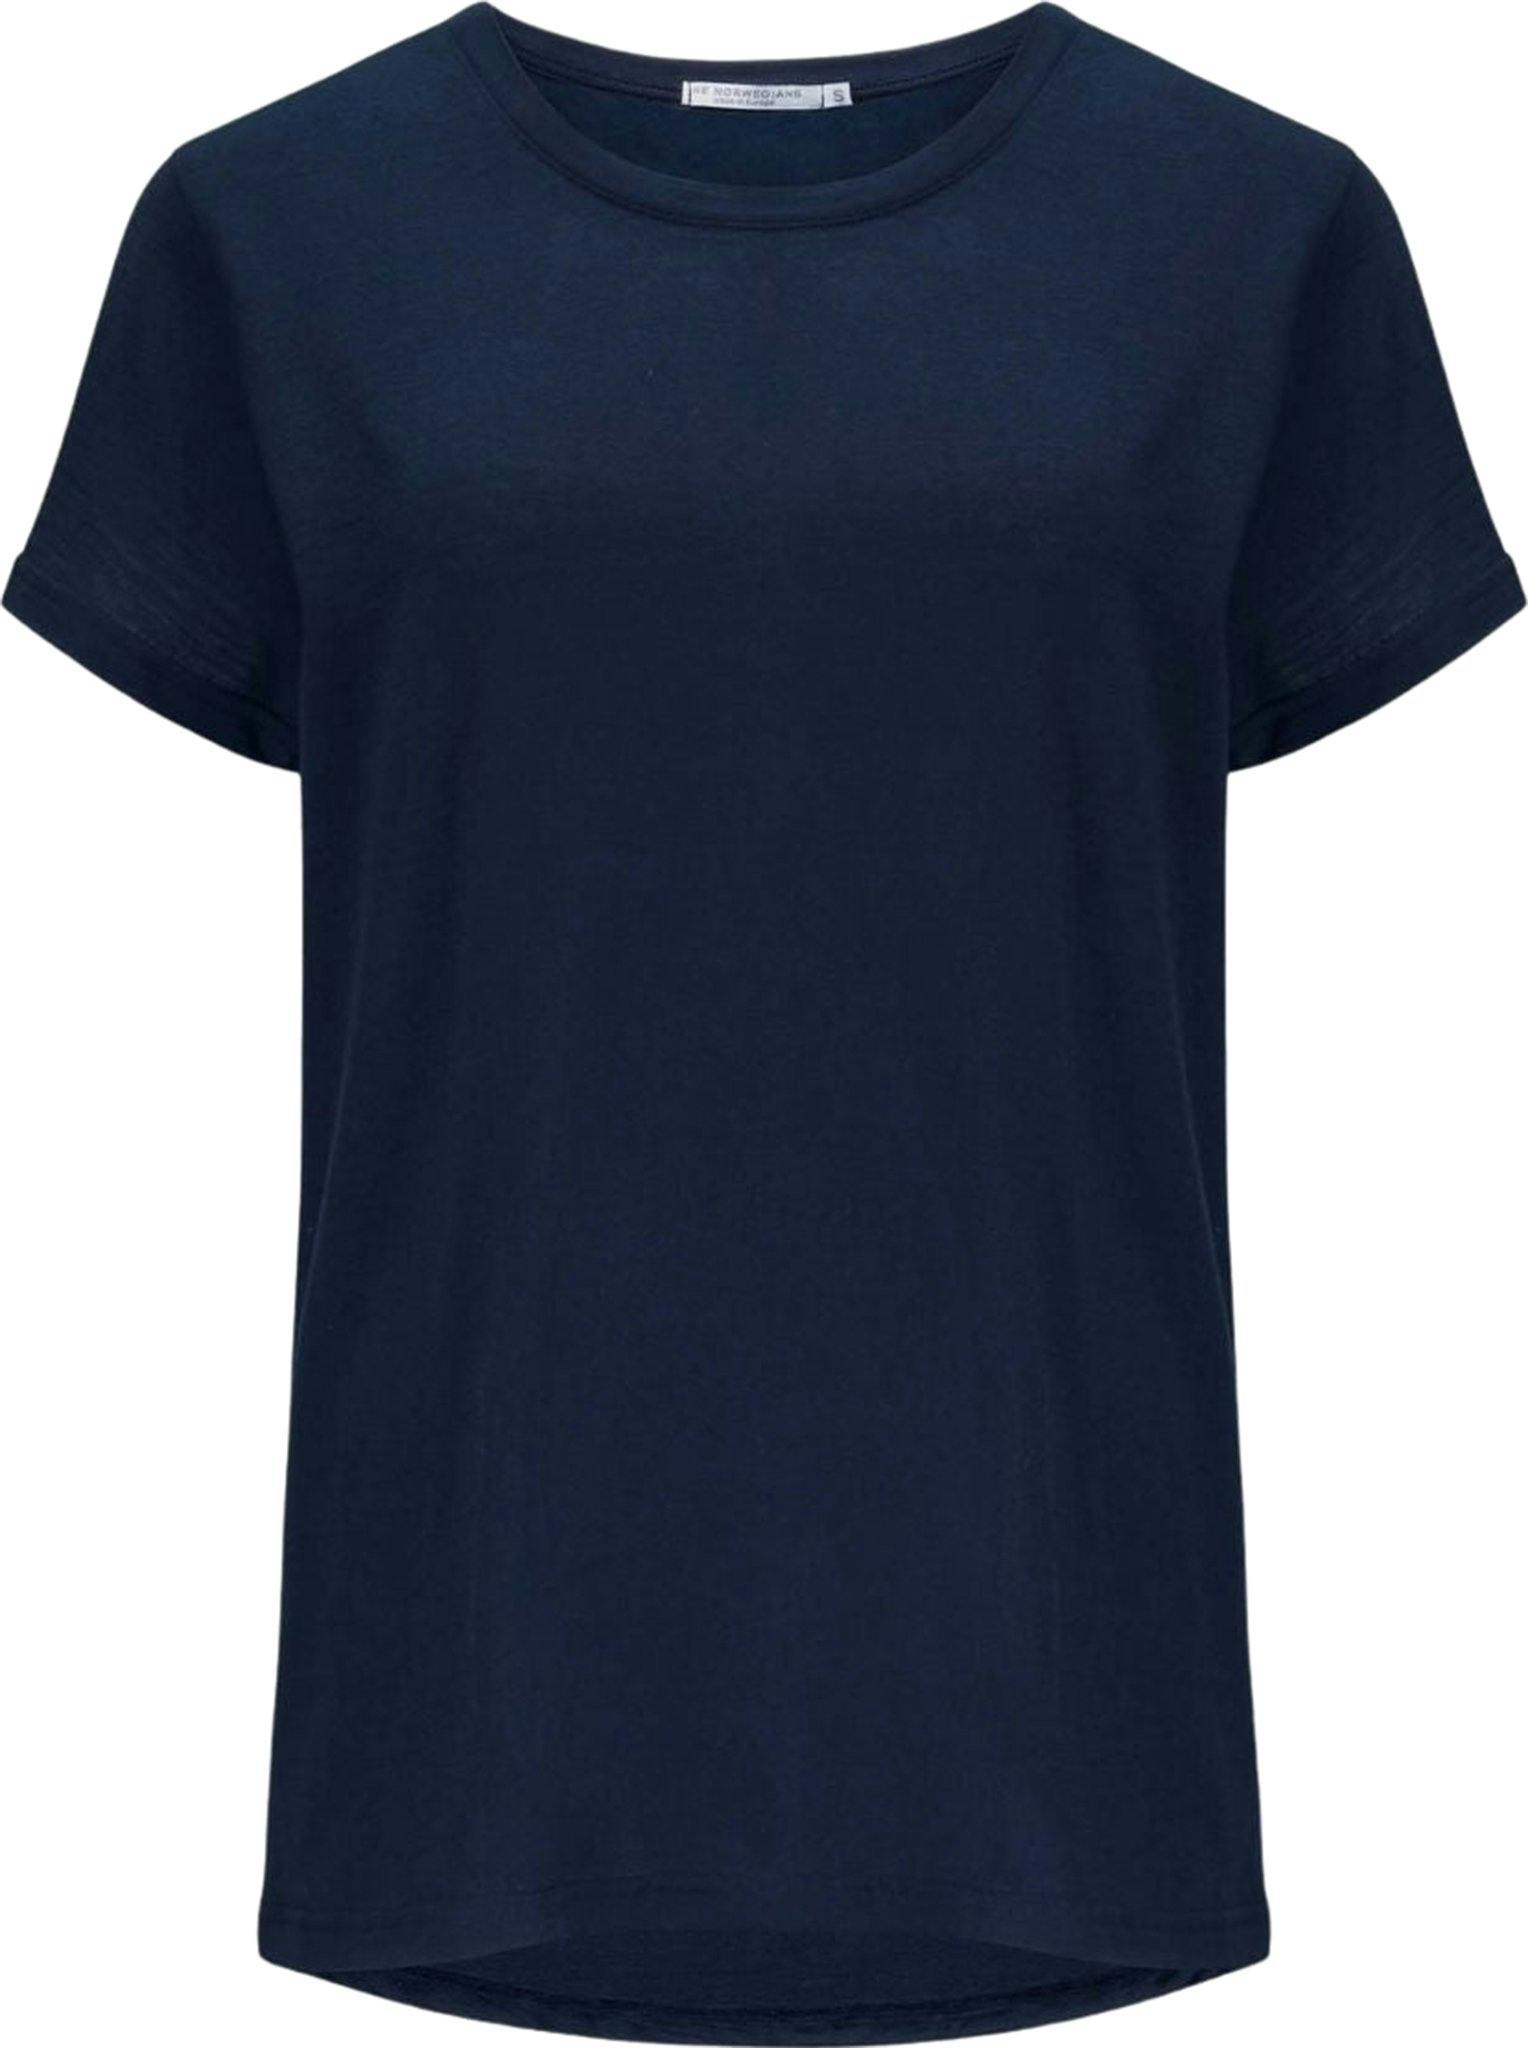 Product image for Skog T-shirt - Women's